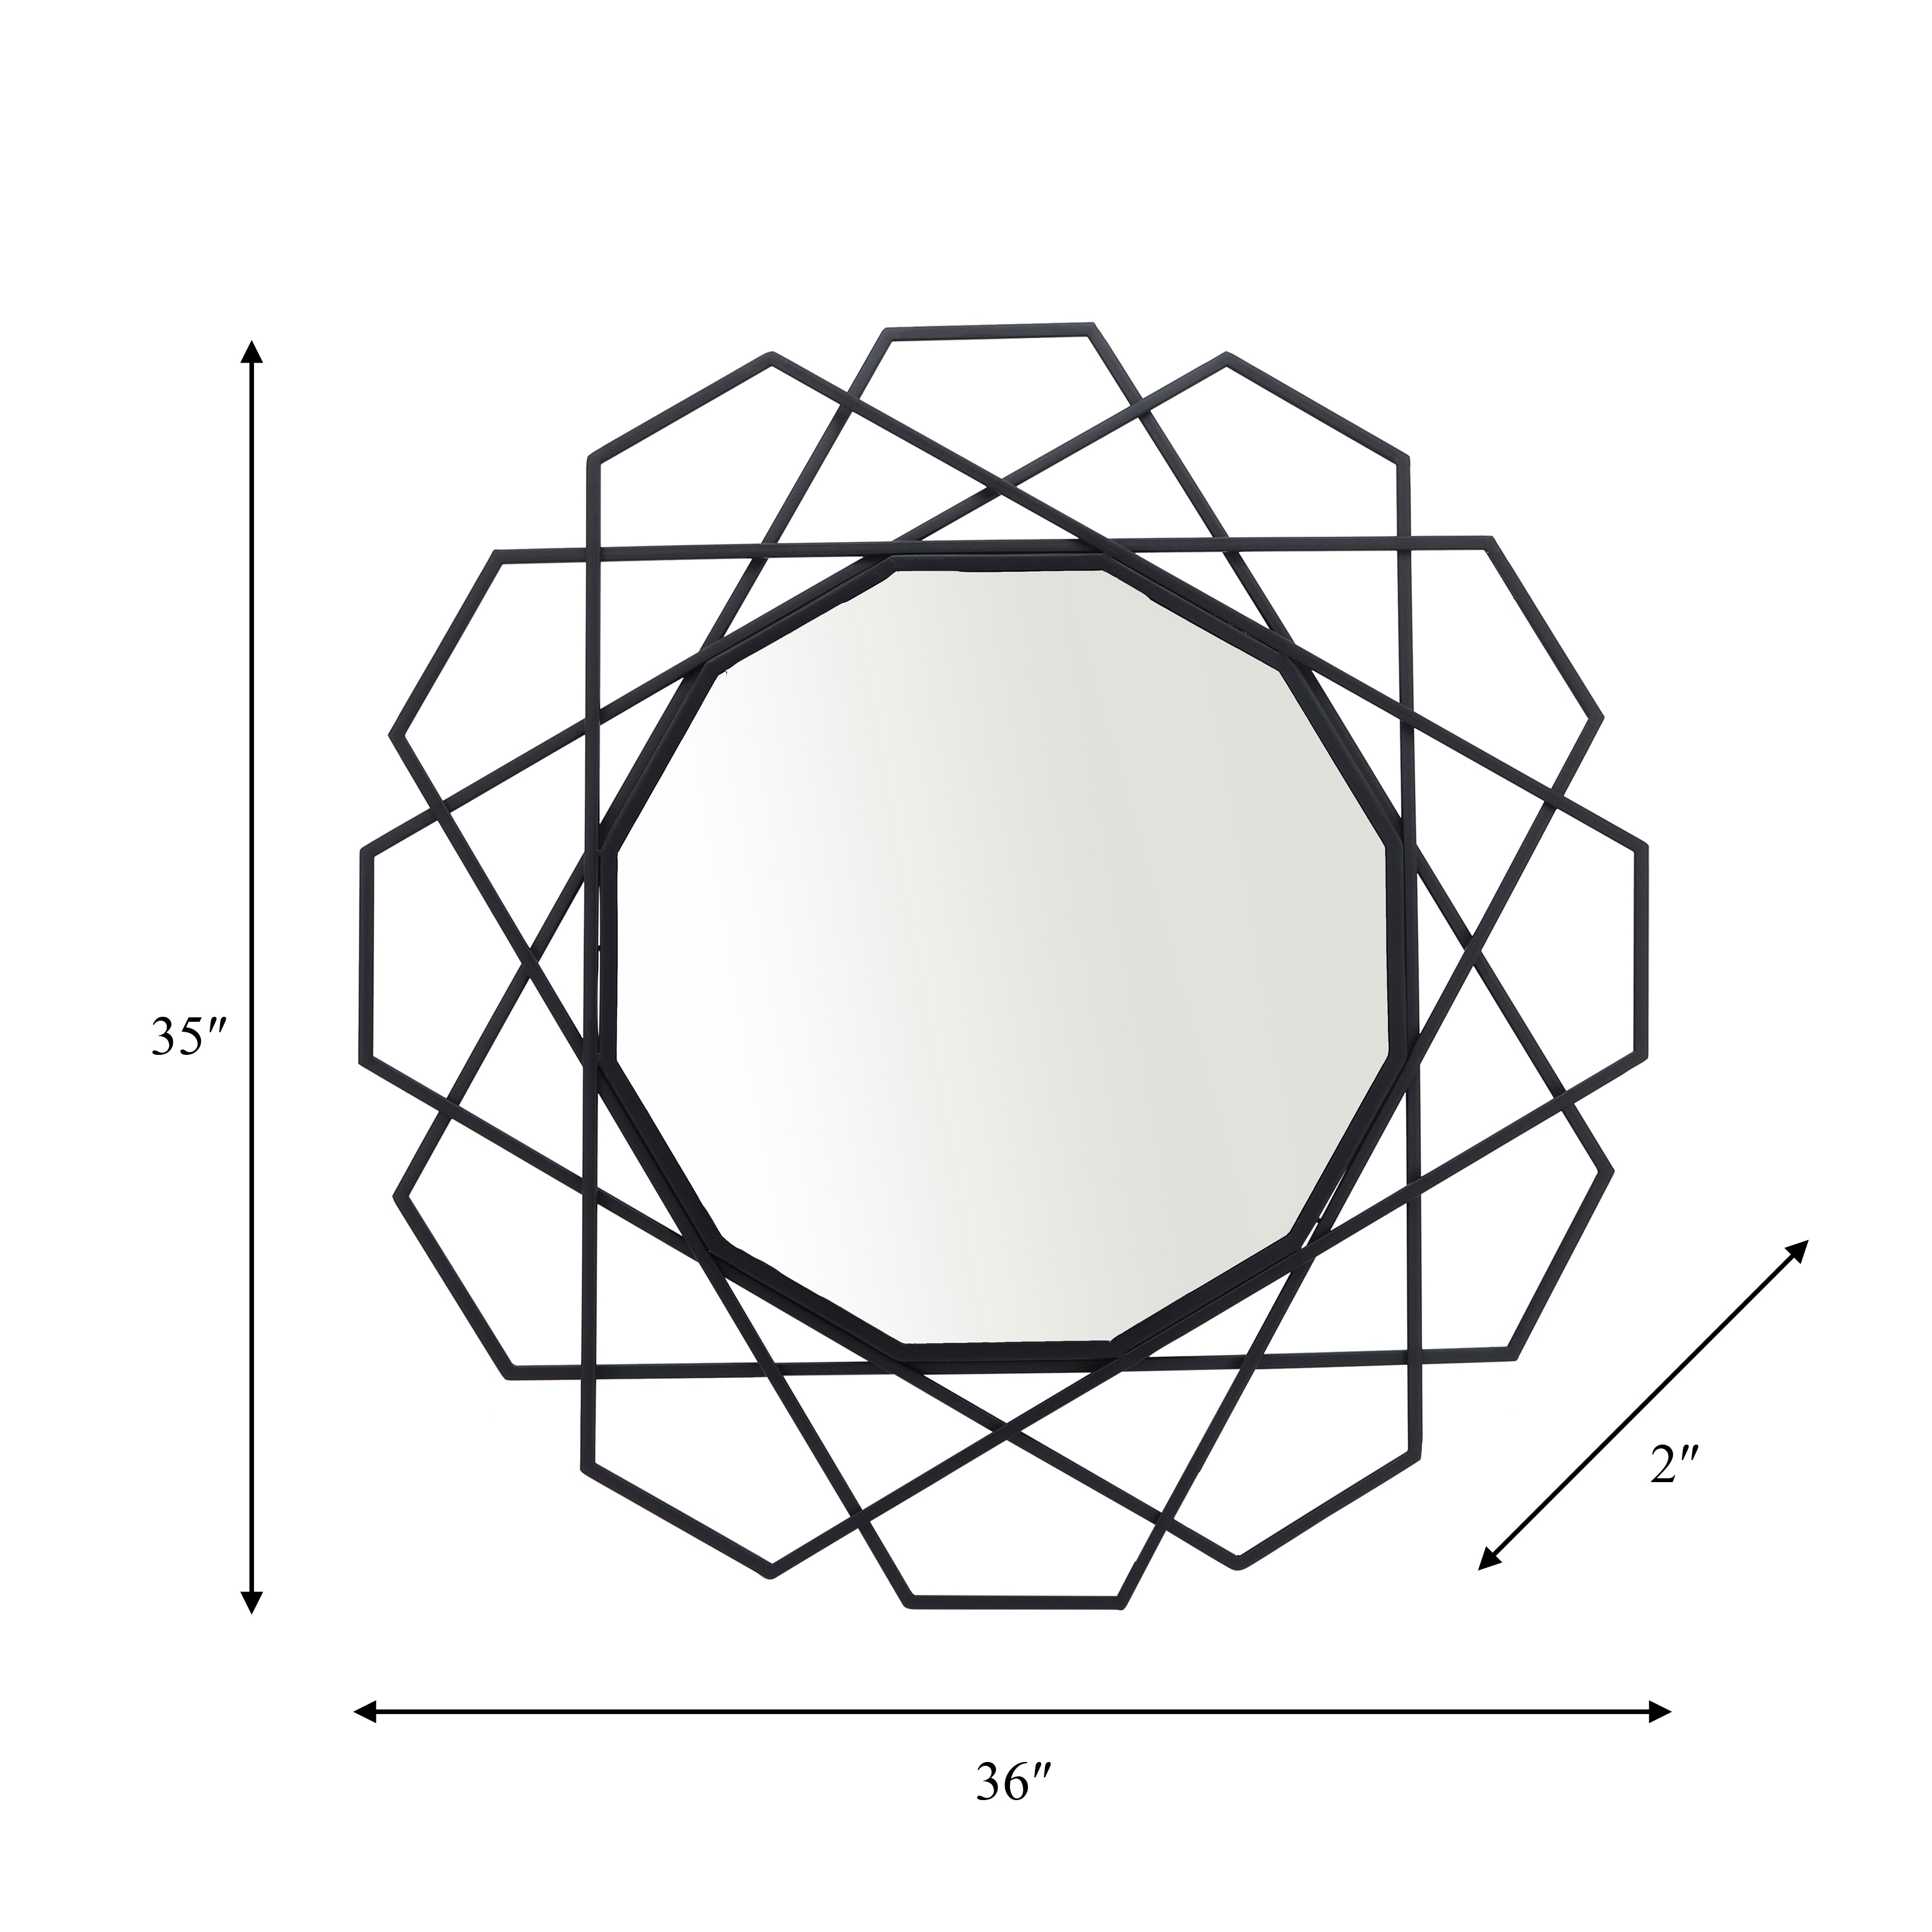 Metal 35" Geometric Mirror, Black Wb 35"H - 36.0" x 2.0" x 35.0"